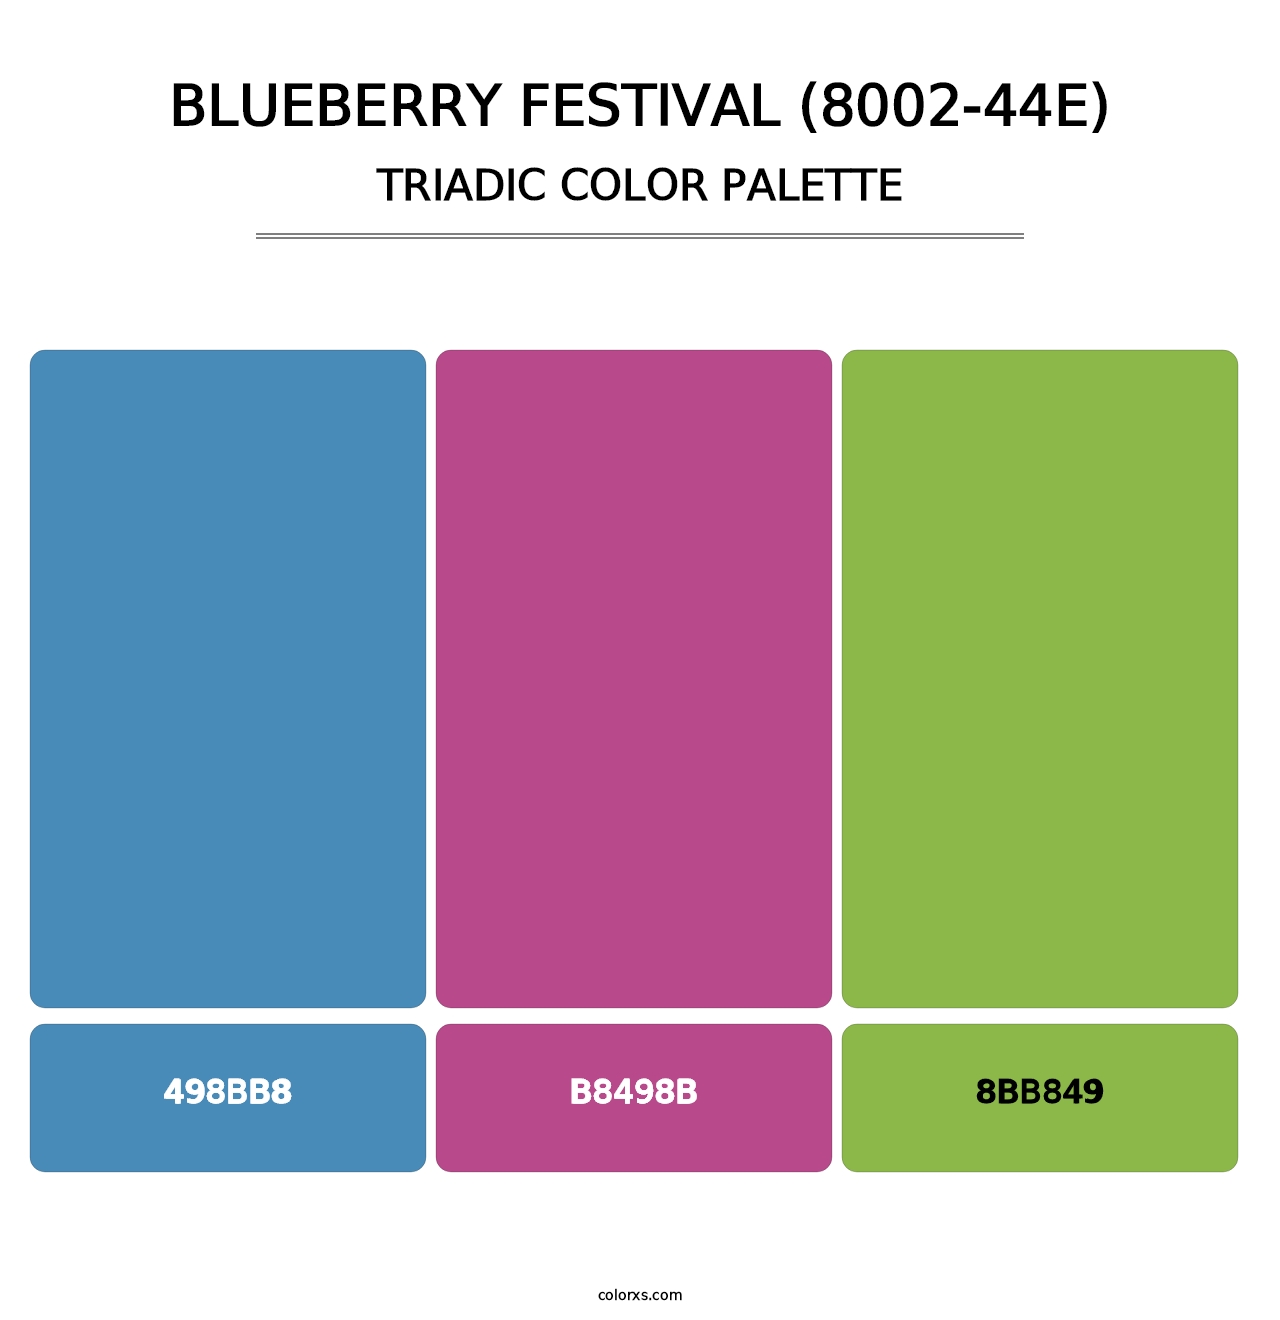 Blueberry Festival (8002-44E) - Triadic Color Palette